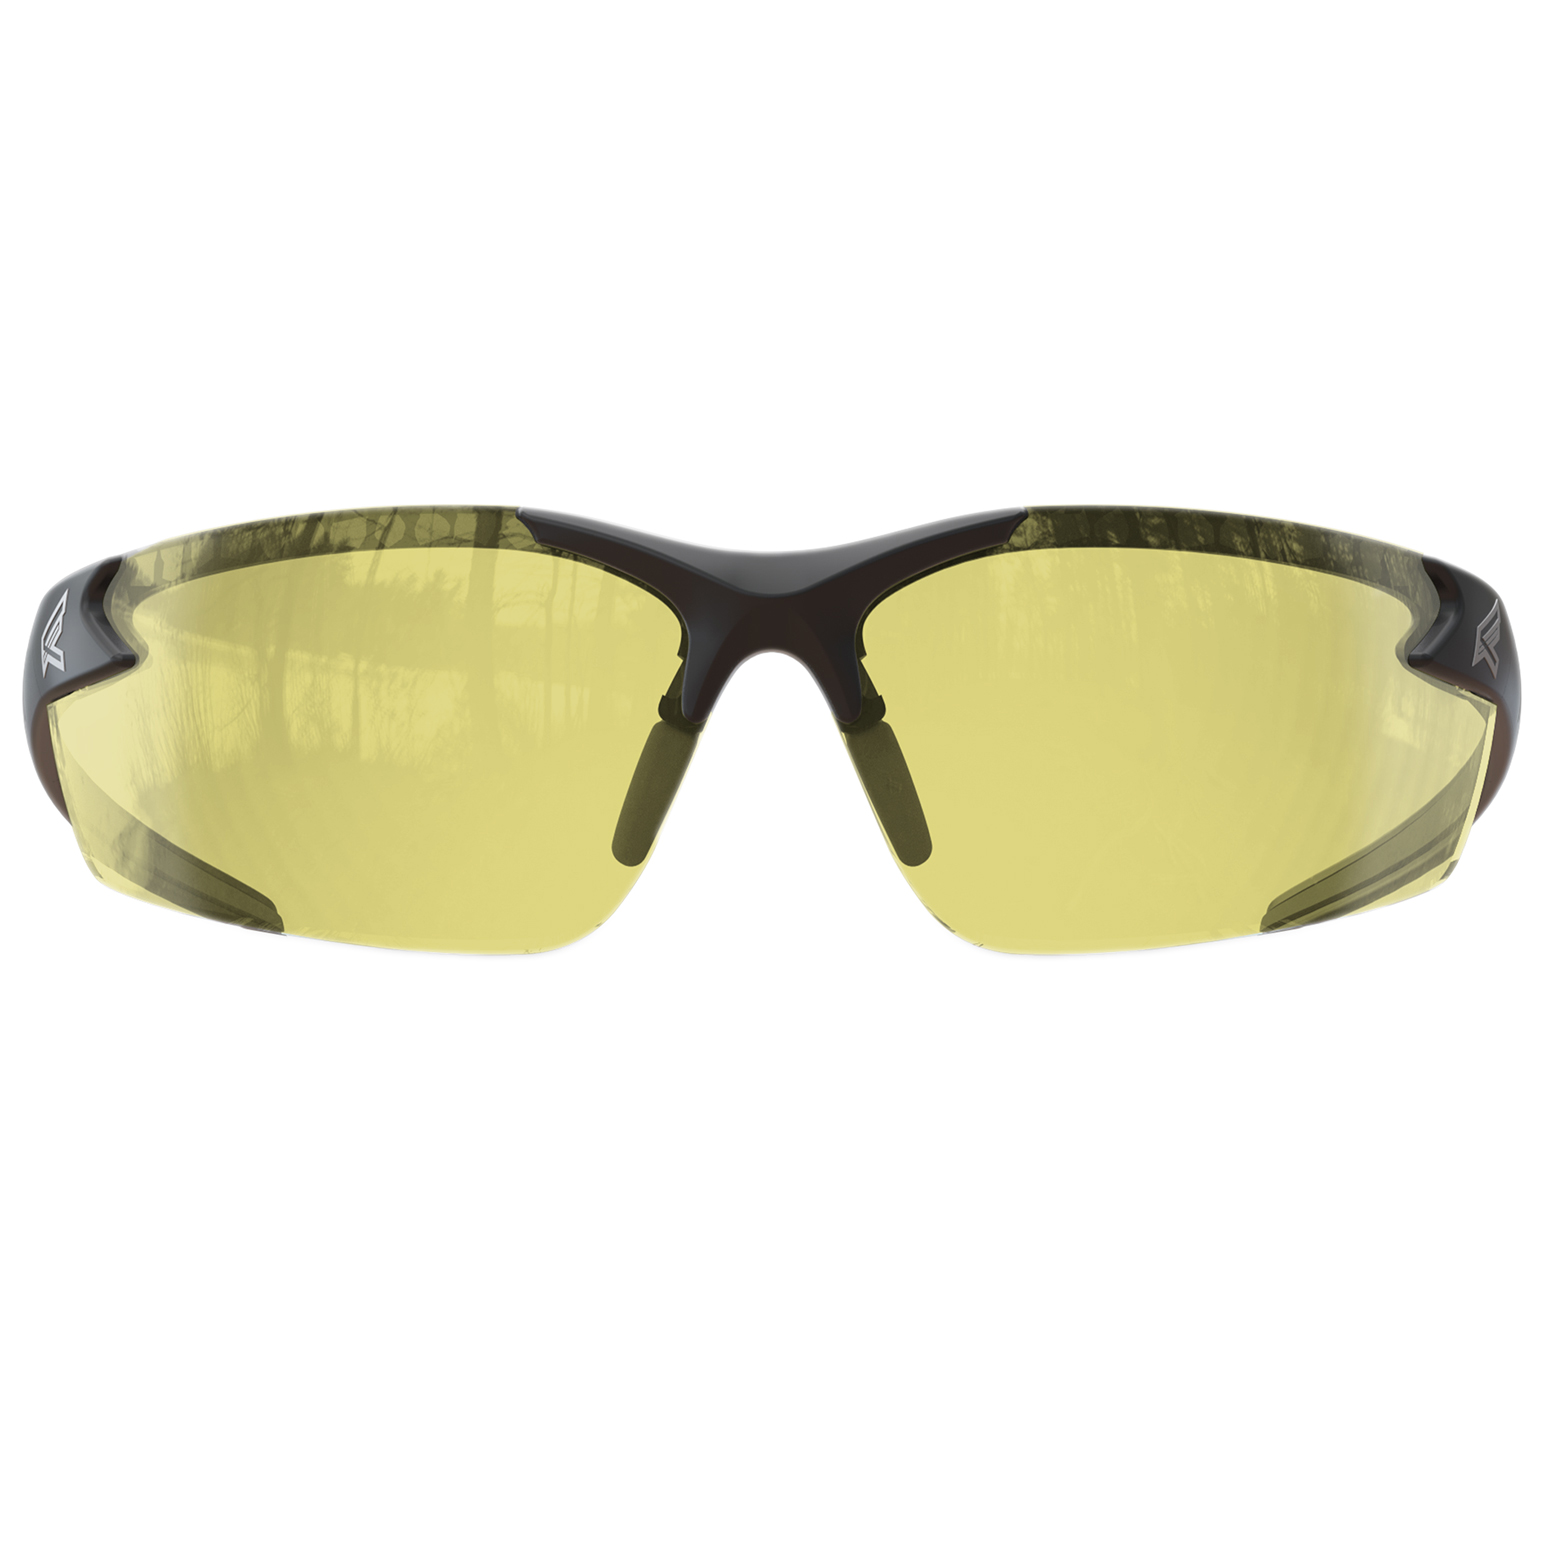 Bolle' Safety-40150 Polarized Safety Glasses, Anti-Fog, Scratch-Resistant,  Shiny Black